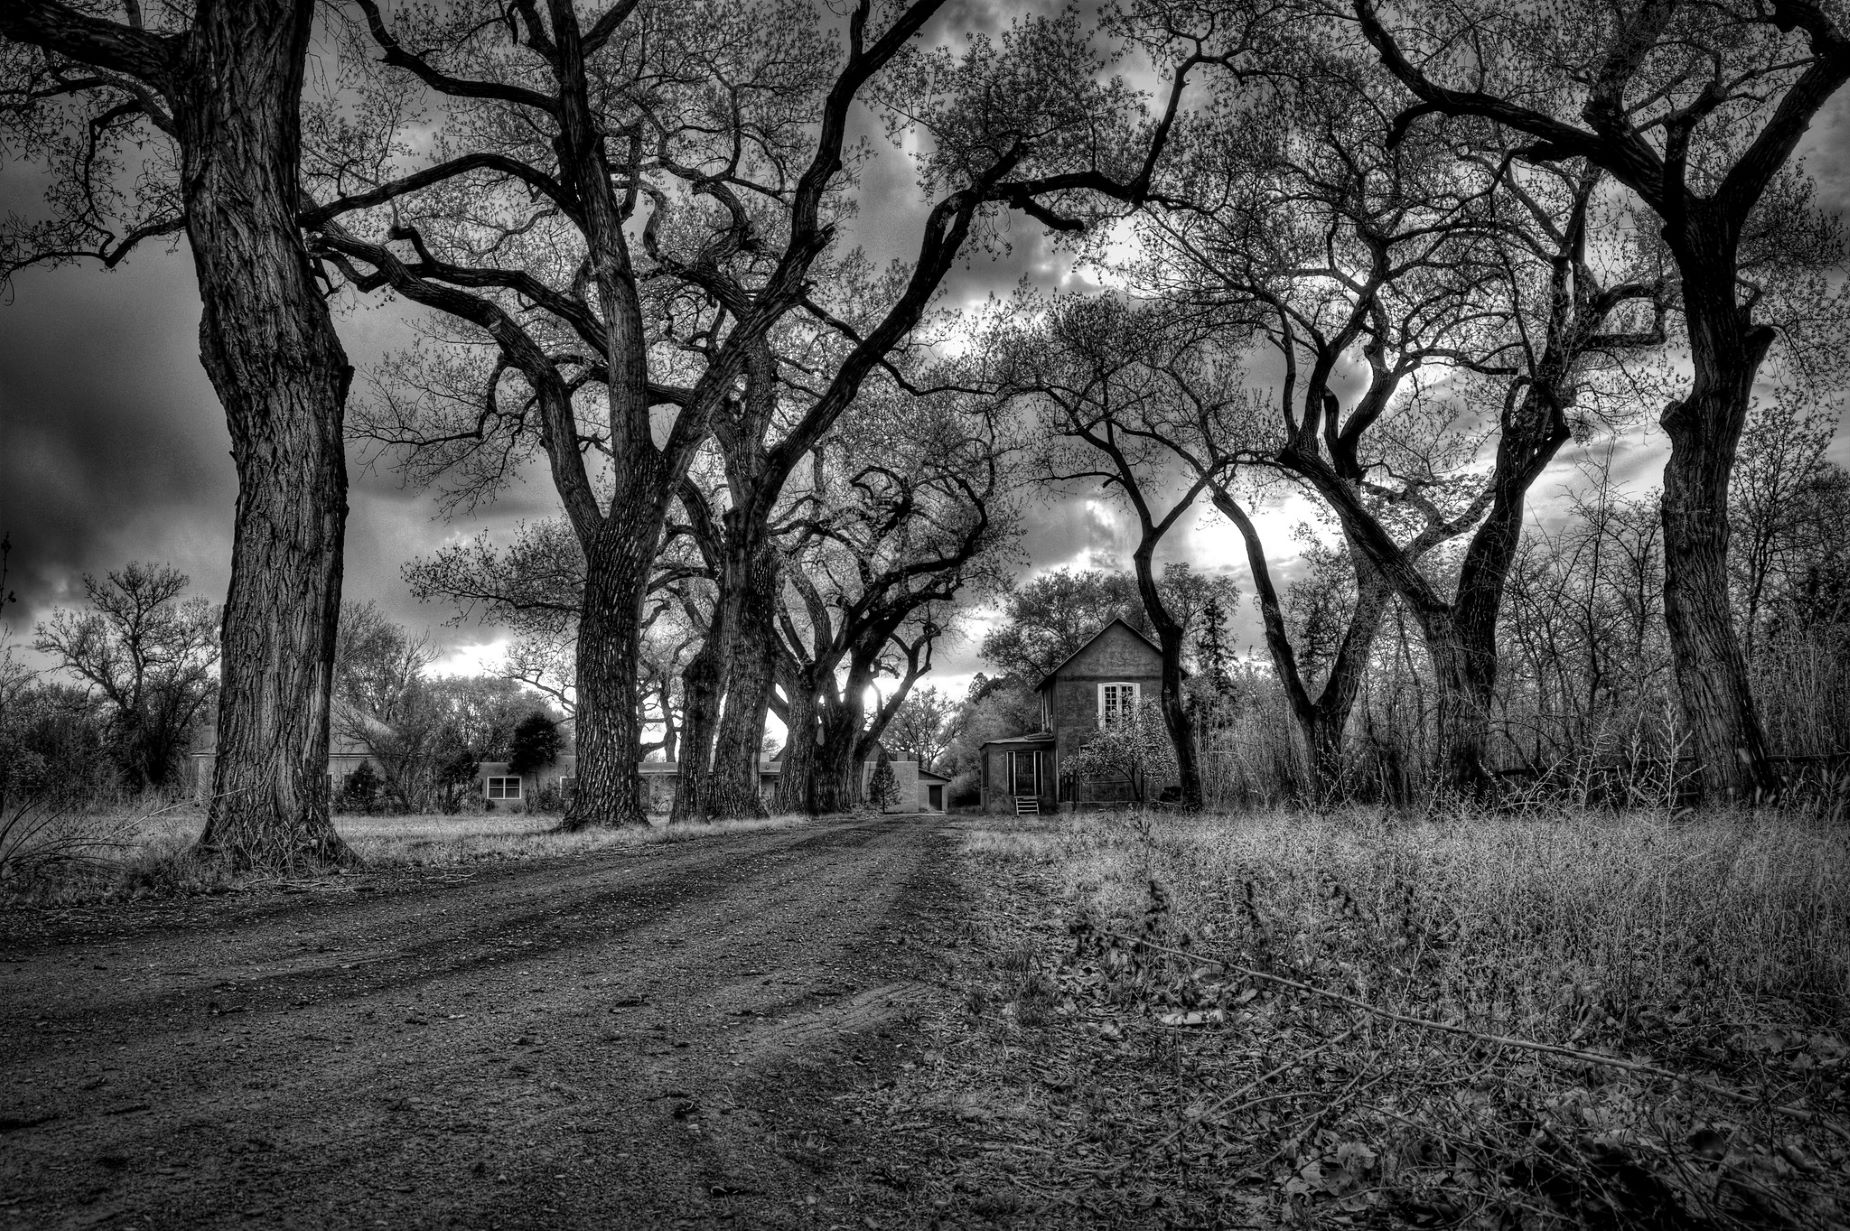 The empty road by Mark scheel